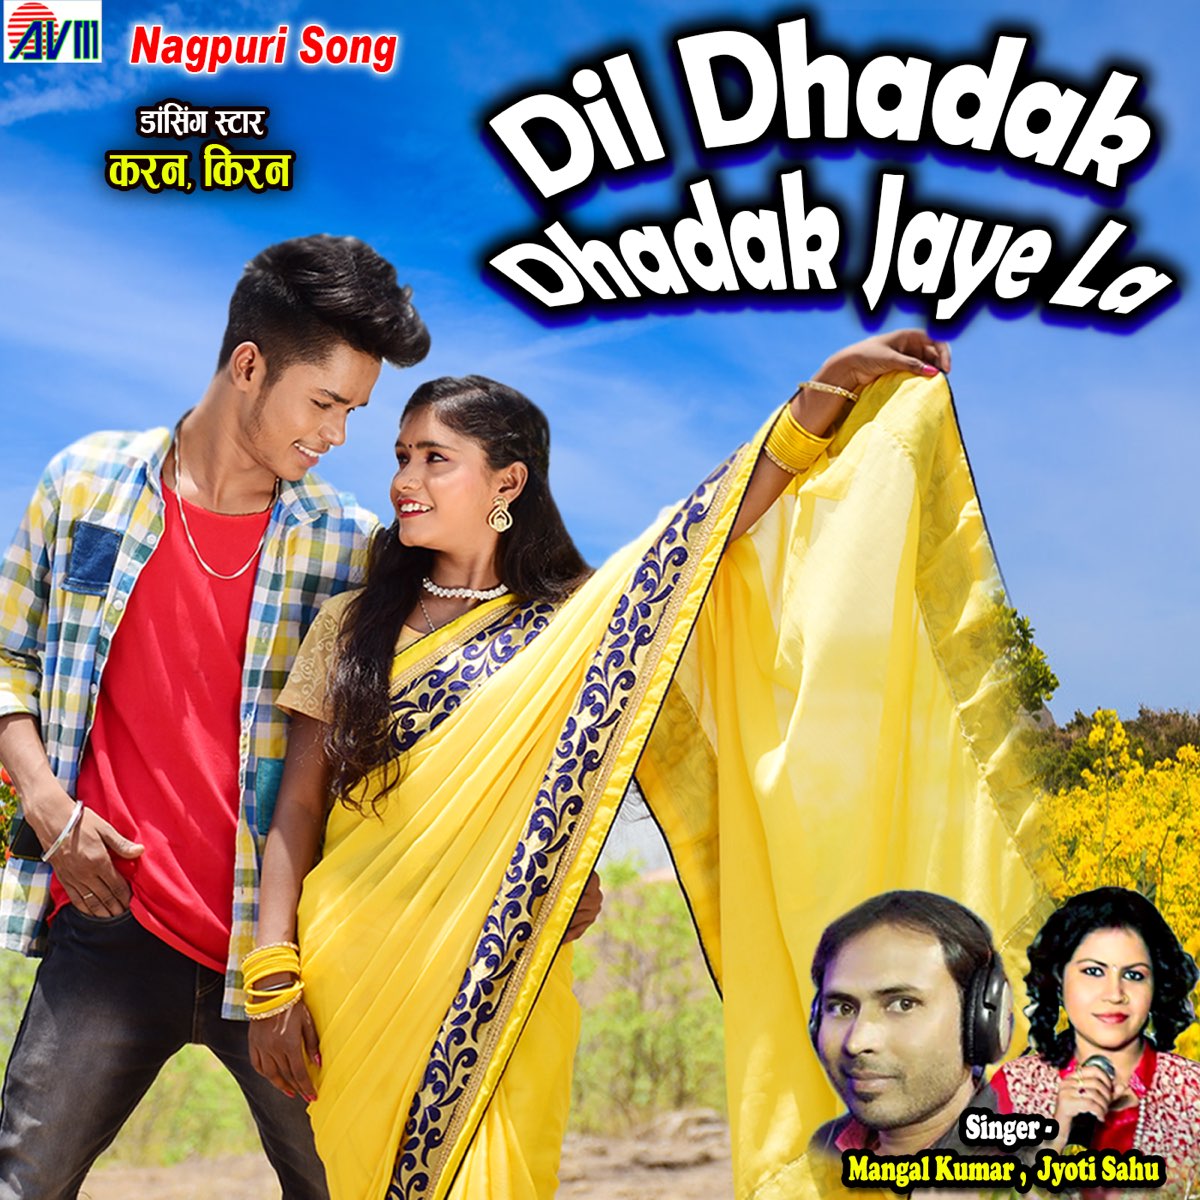 Dil Dhadak Dhadak Jaye La - Single - Album by Mangal Kumar & Jyoti Sahu -  Apple Music